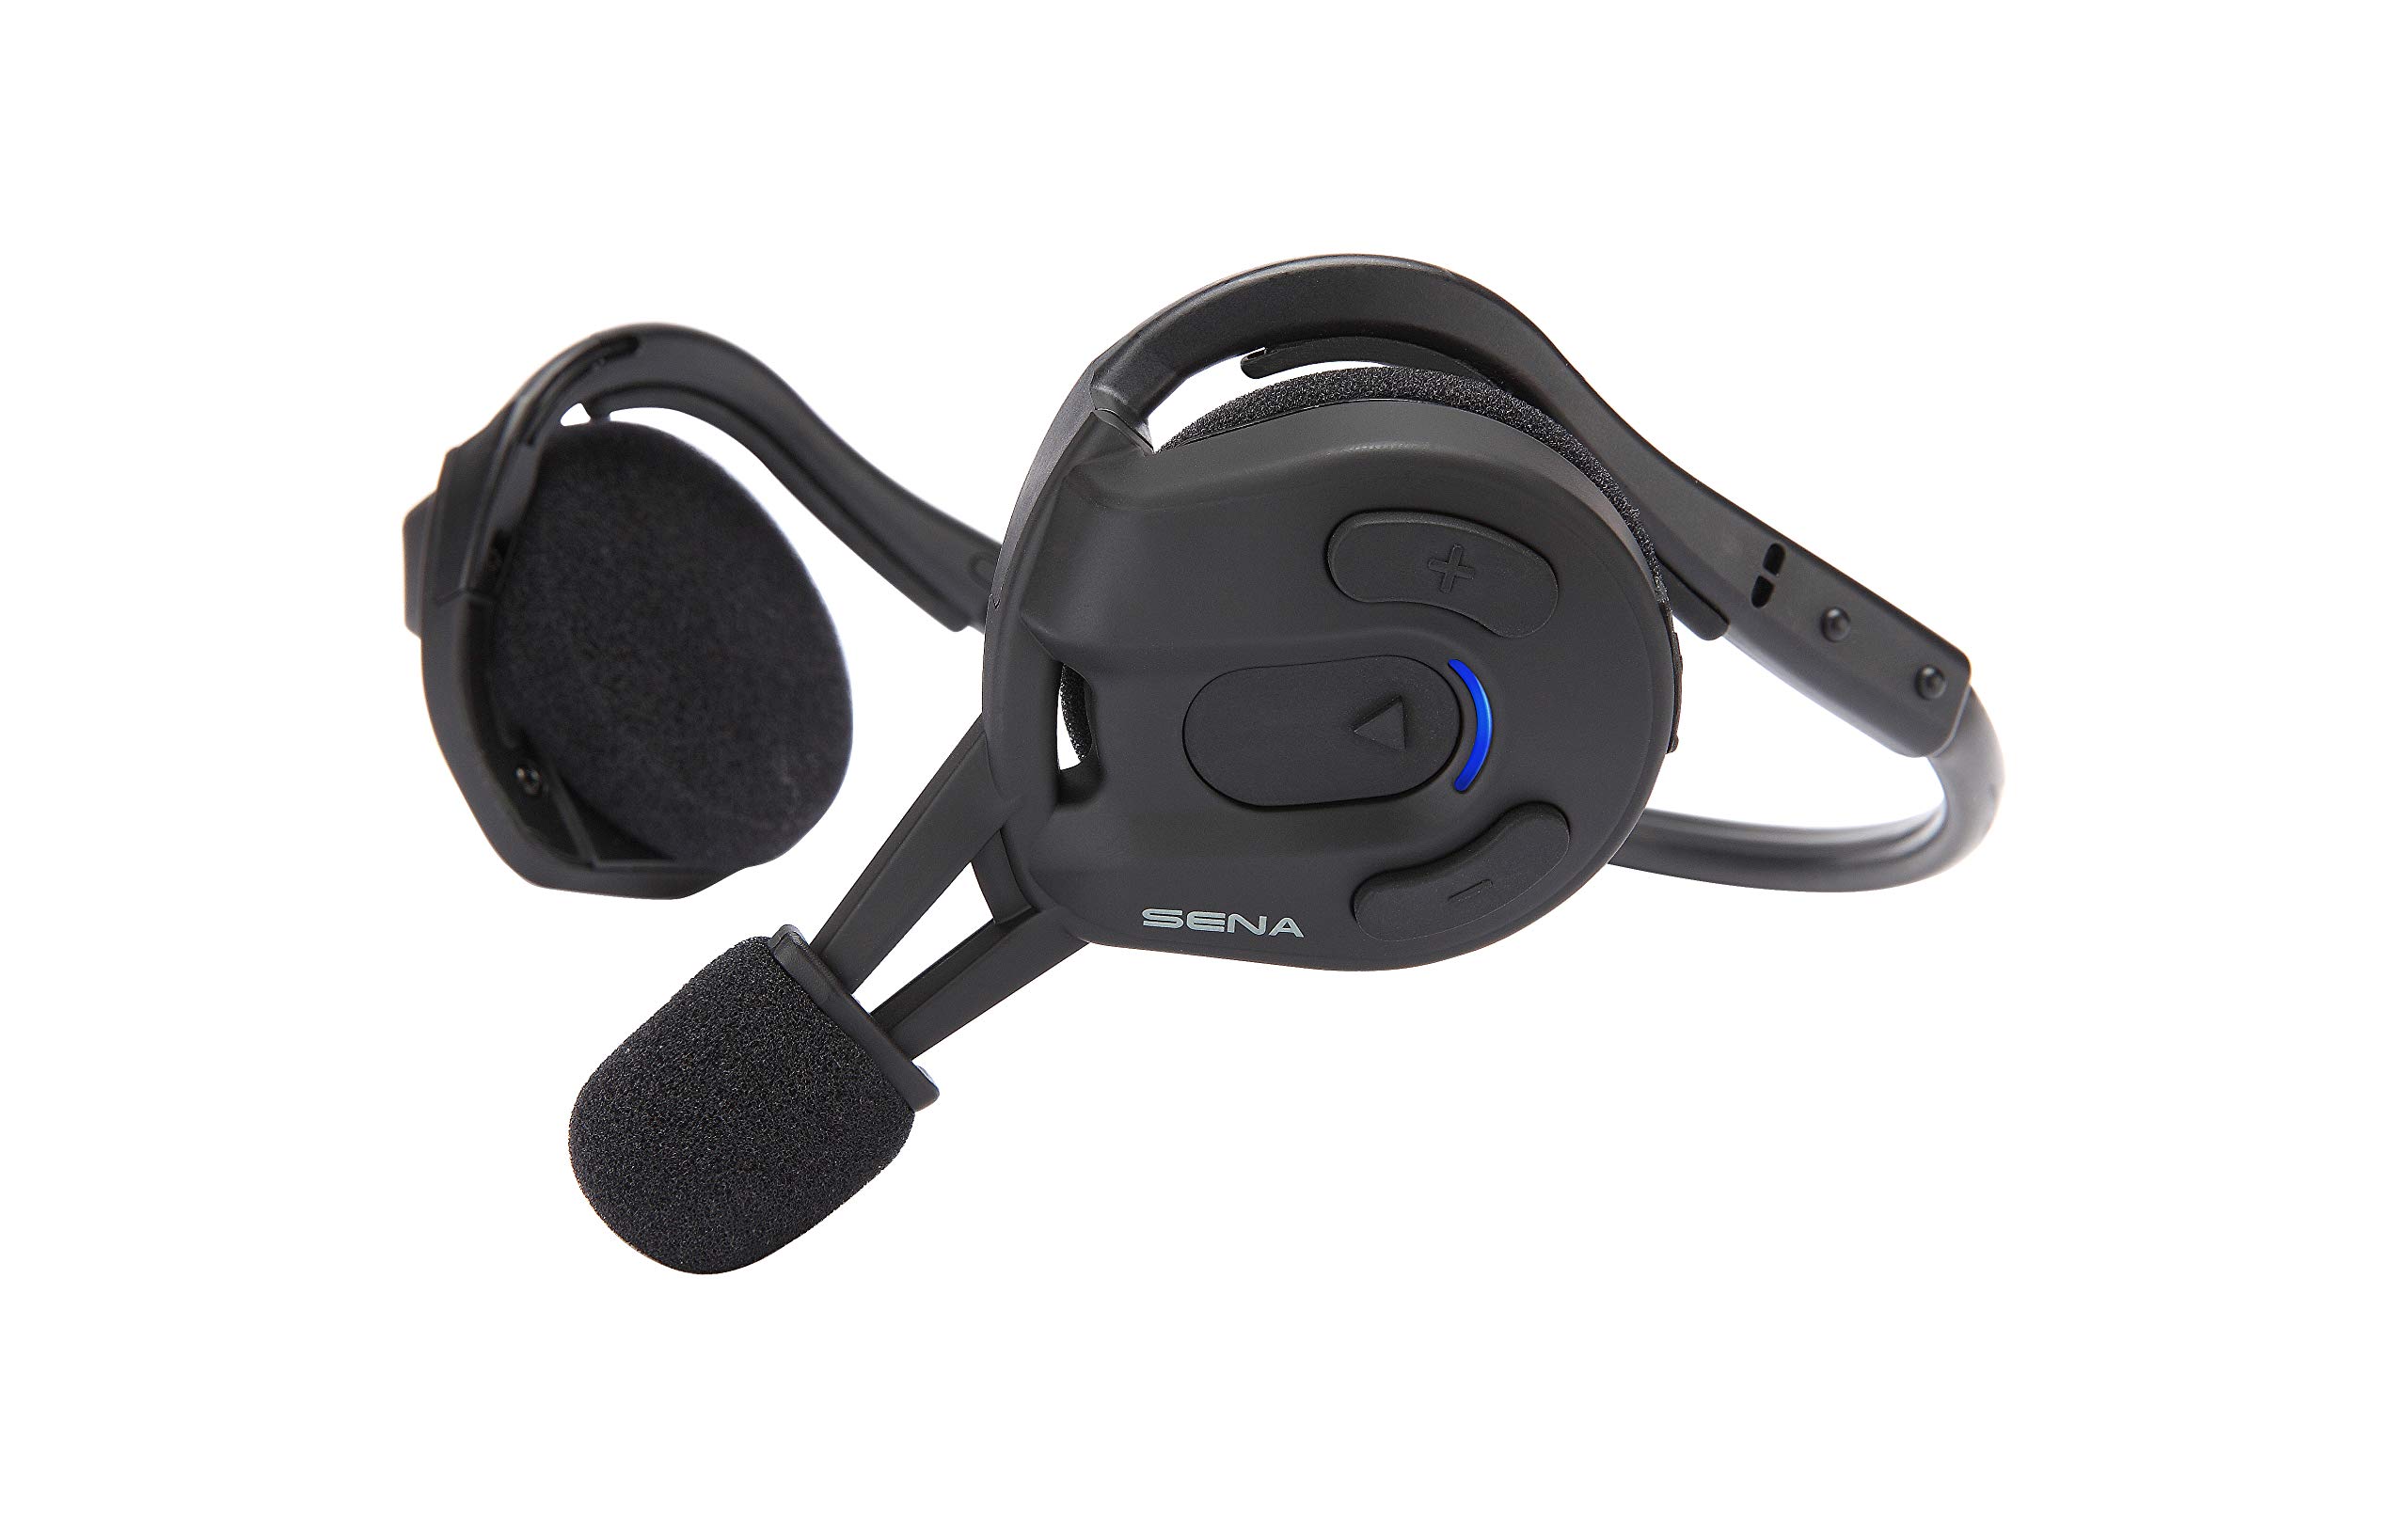 Sena Expand Multi-Sport Bluetooth/Mesh Intercom Communication Headset for Hiking, Rock Climbing, Fishing, Hunting and more